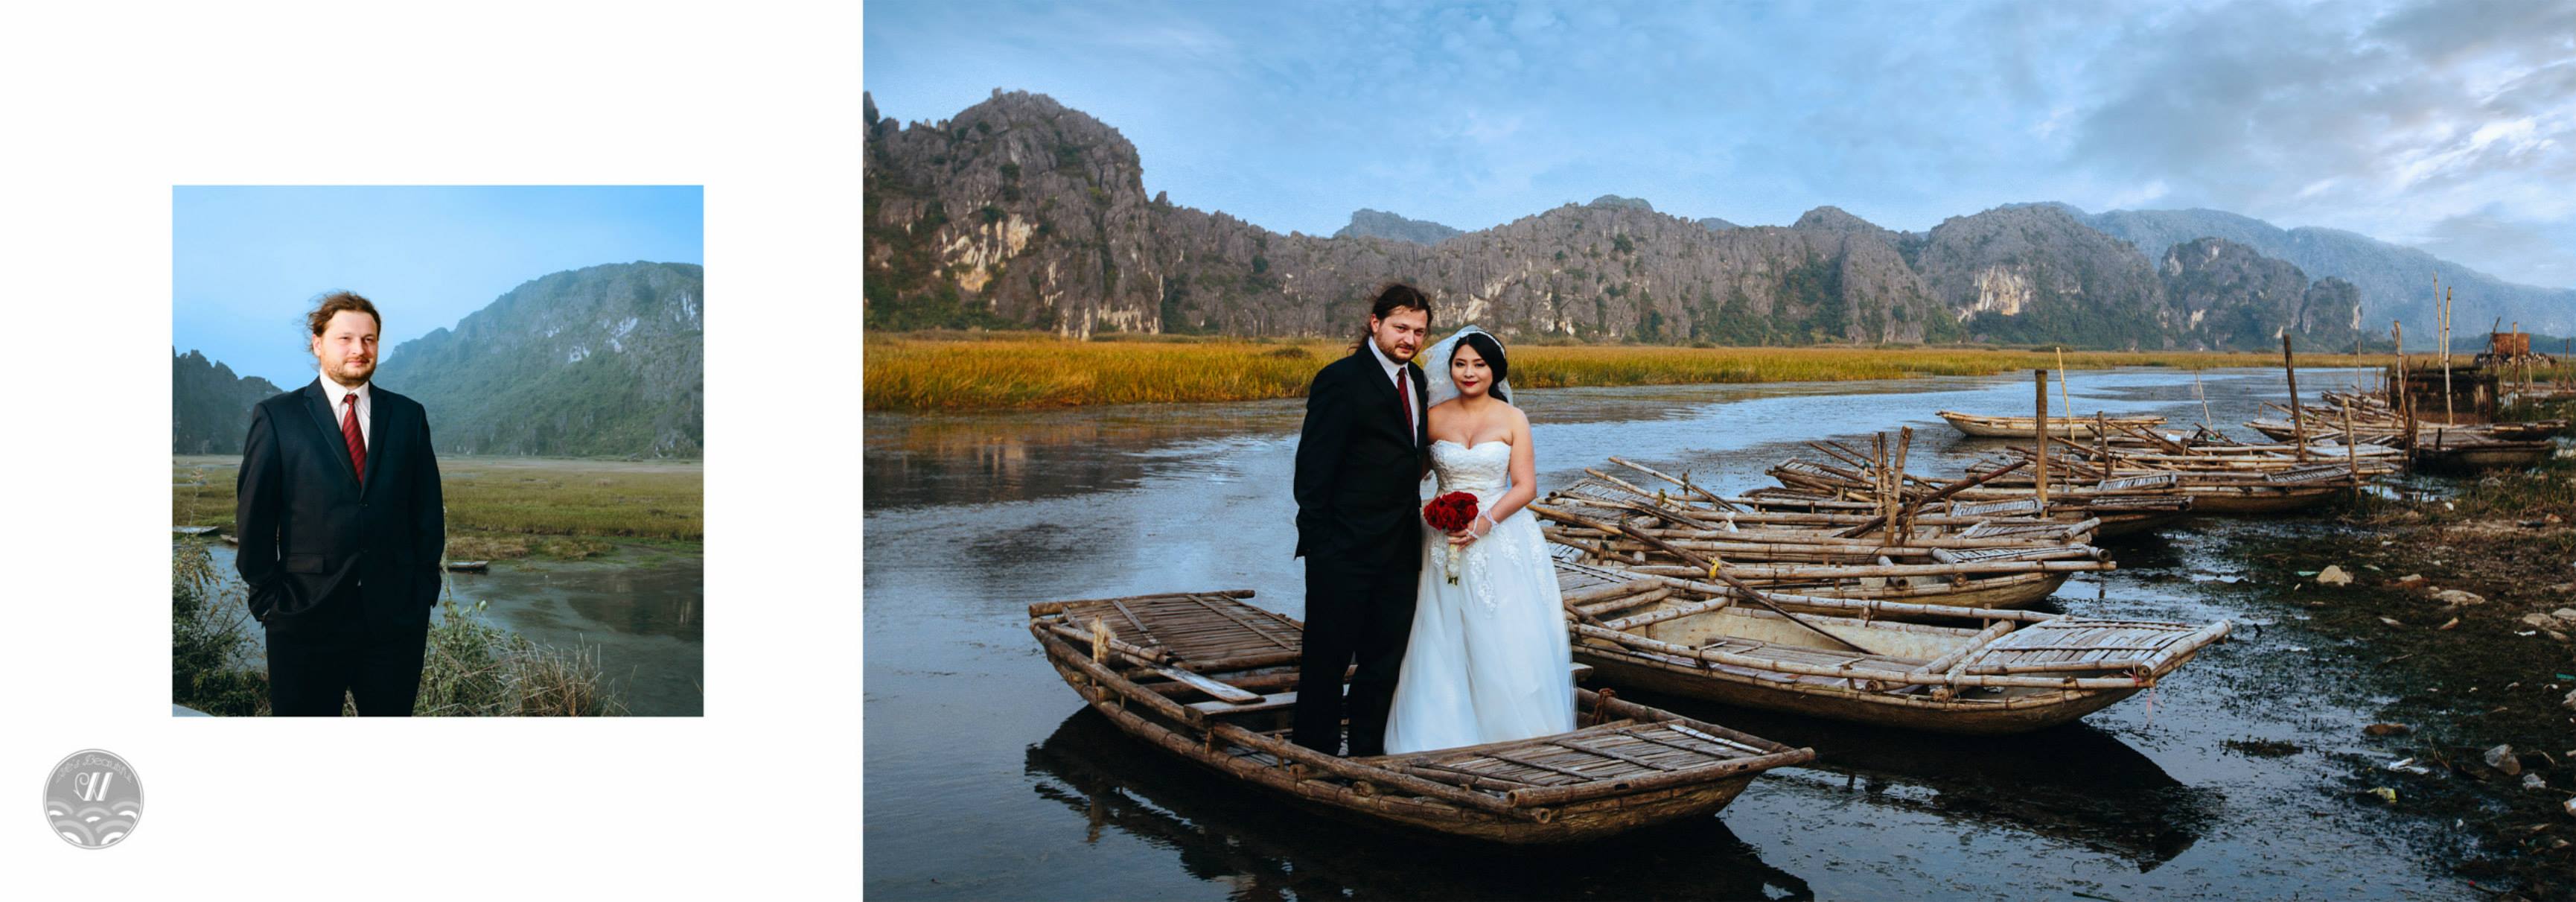 Tomas and Trang Pre-wedding in Ninh Bình